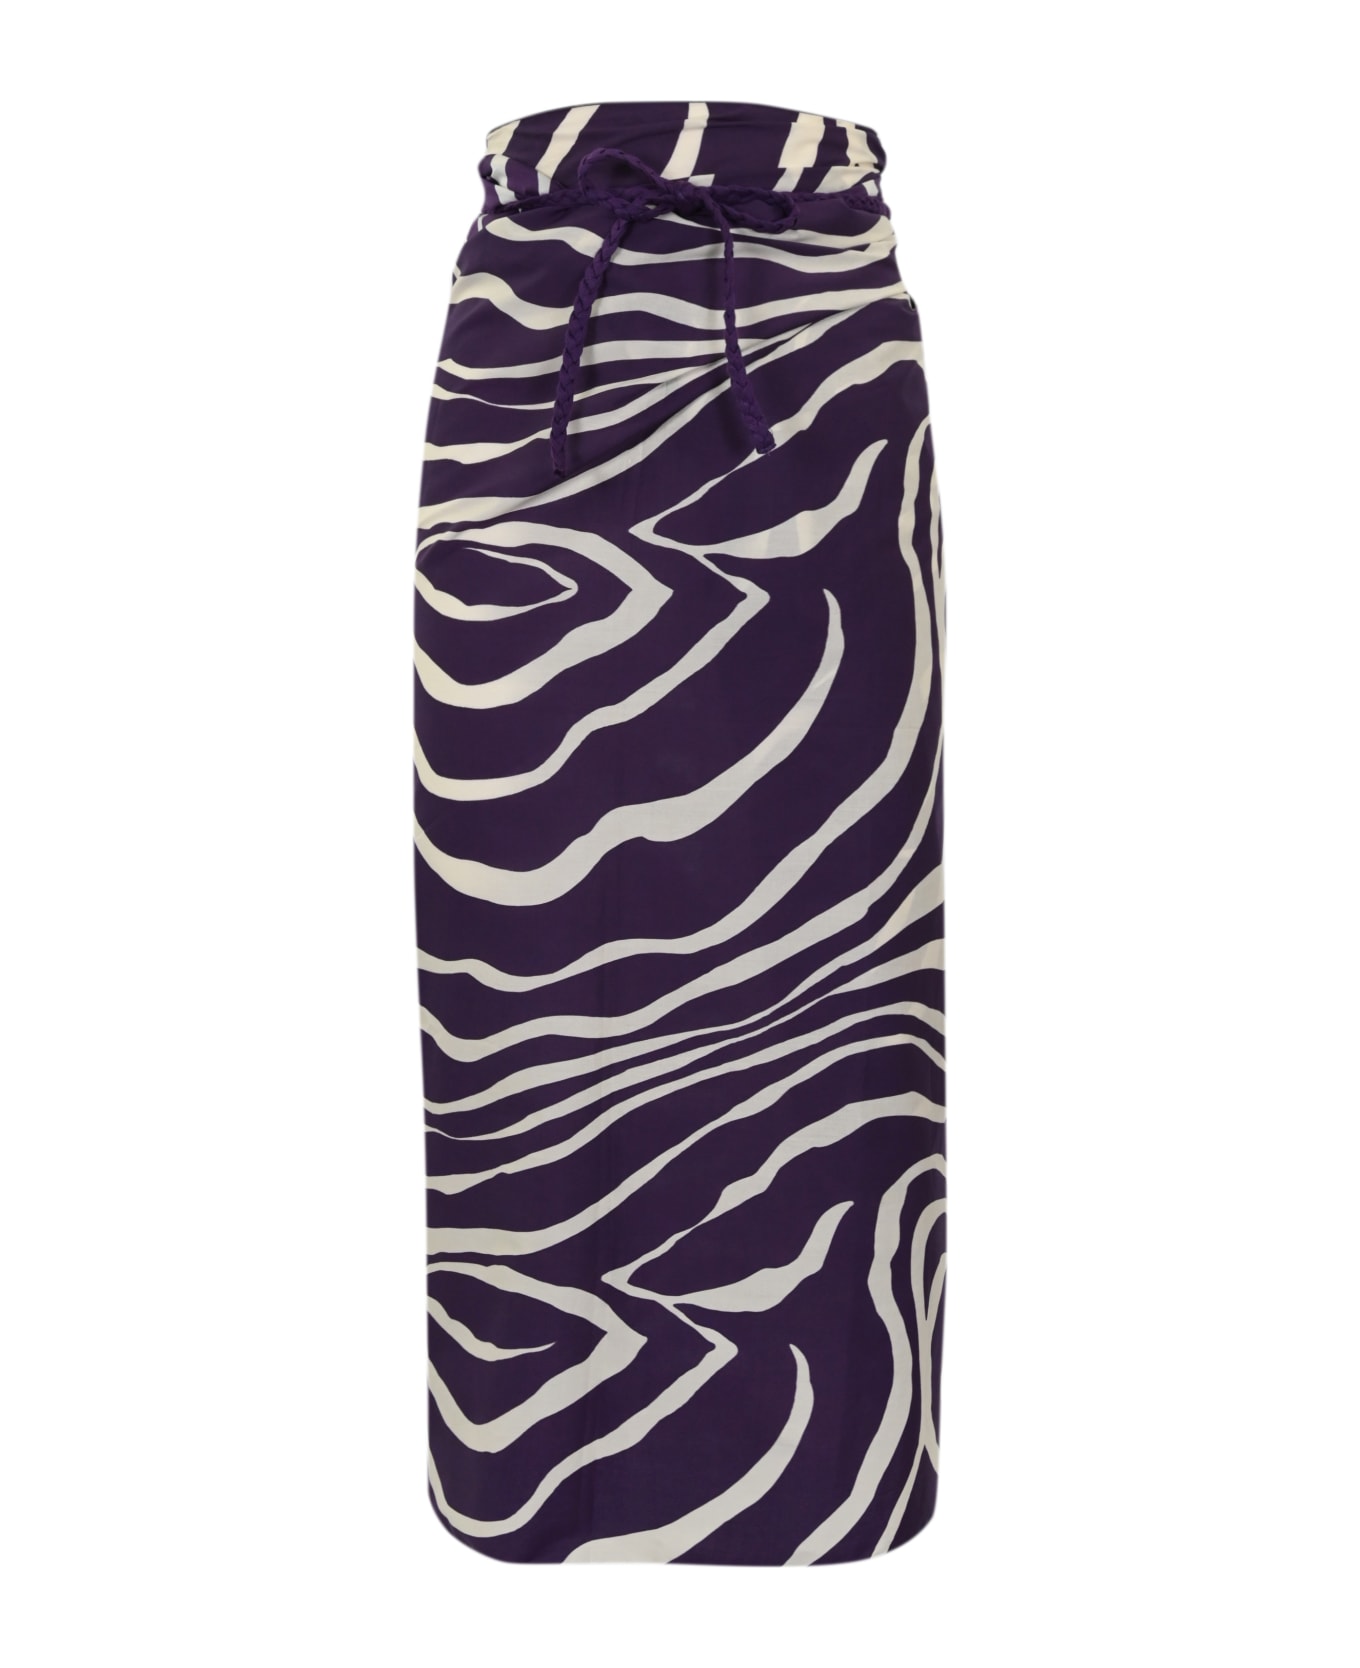 Liviana Conti Zebra Sarong Skirt - Venatura bacca スカート